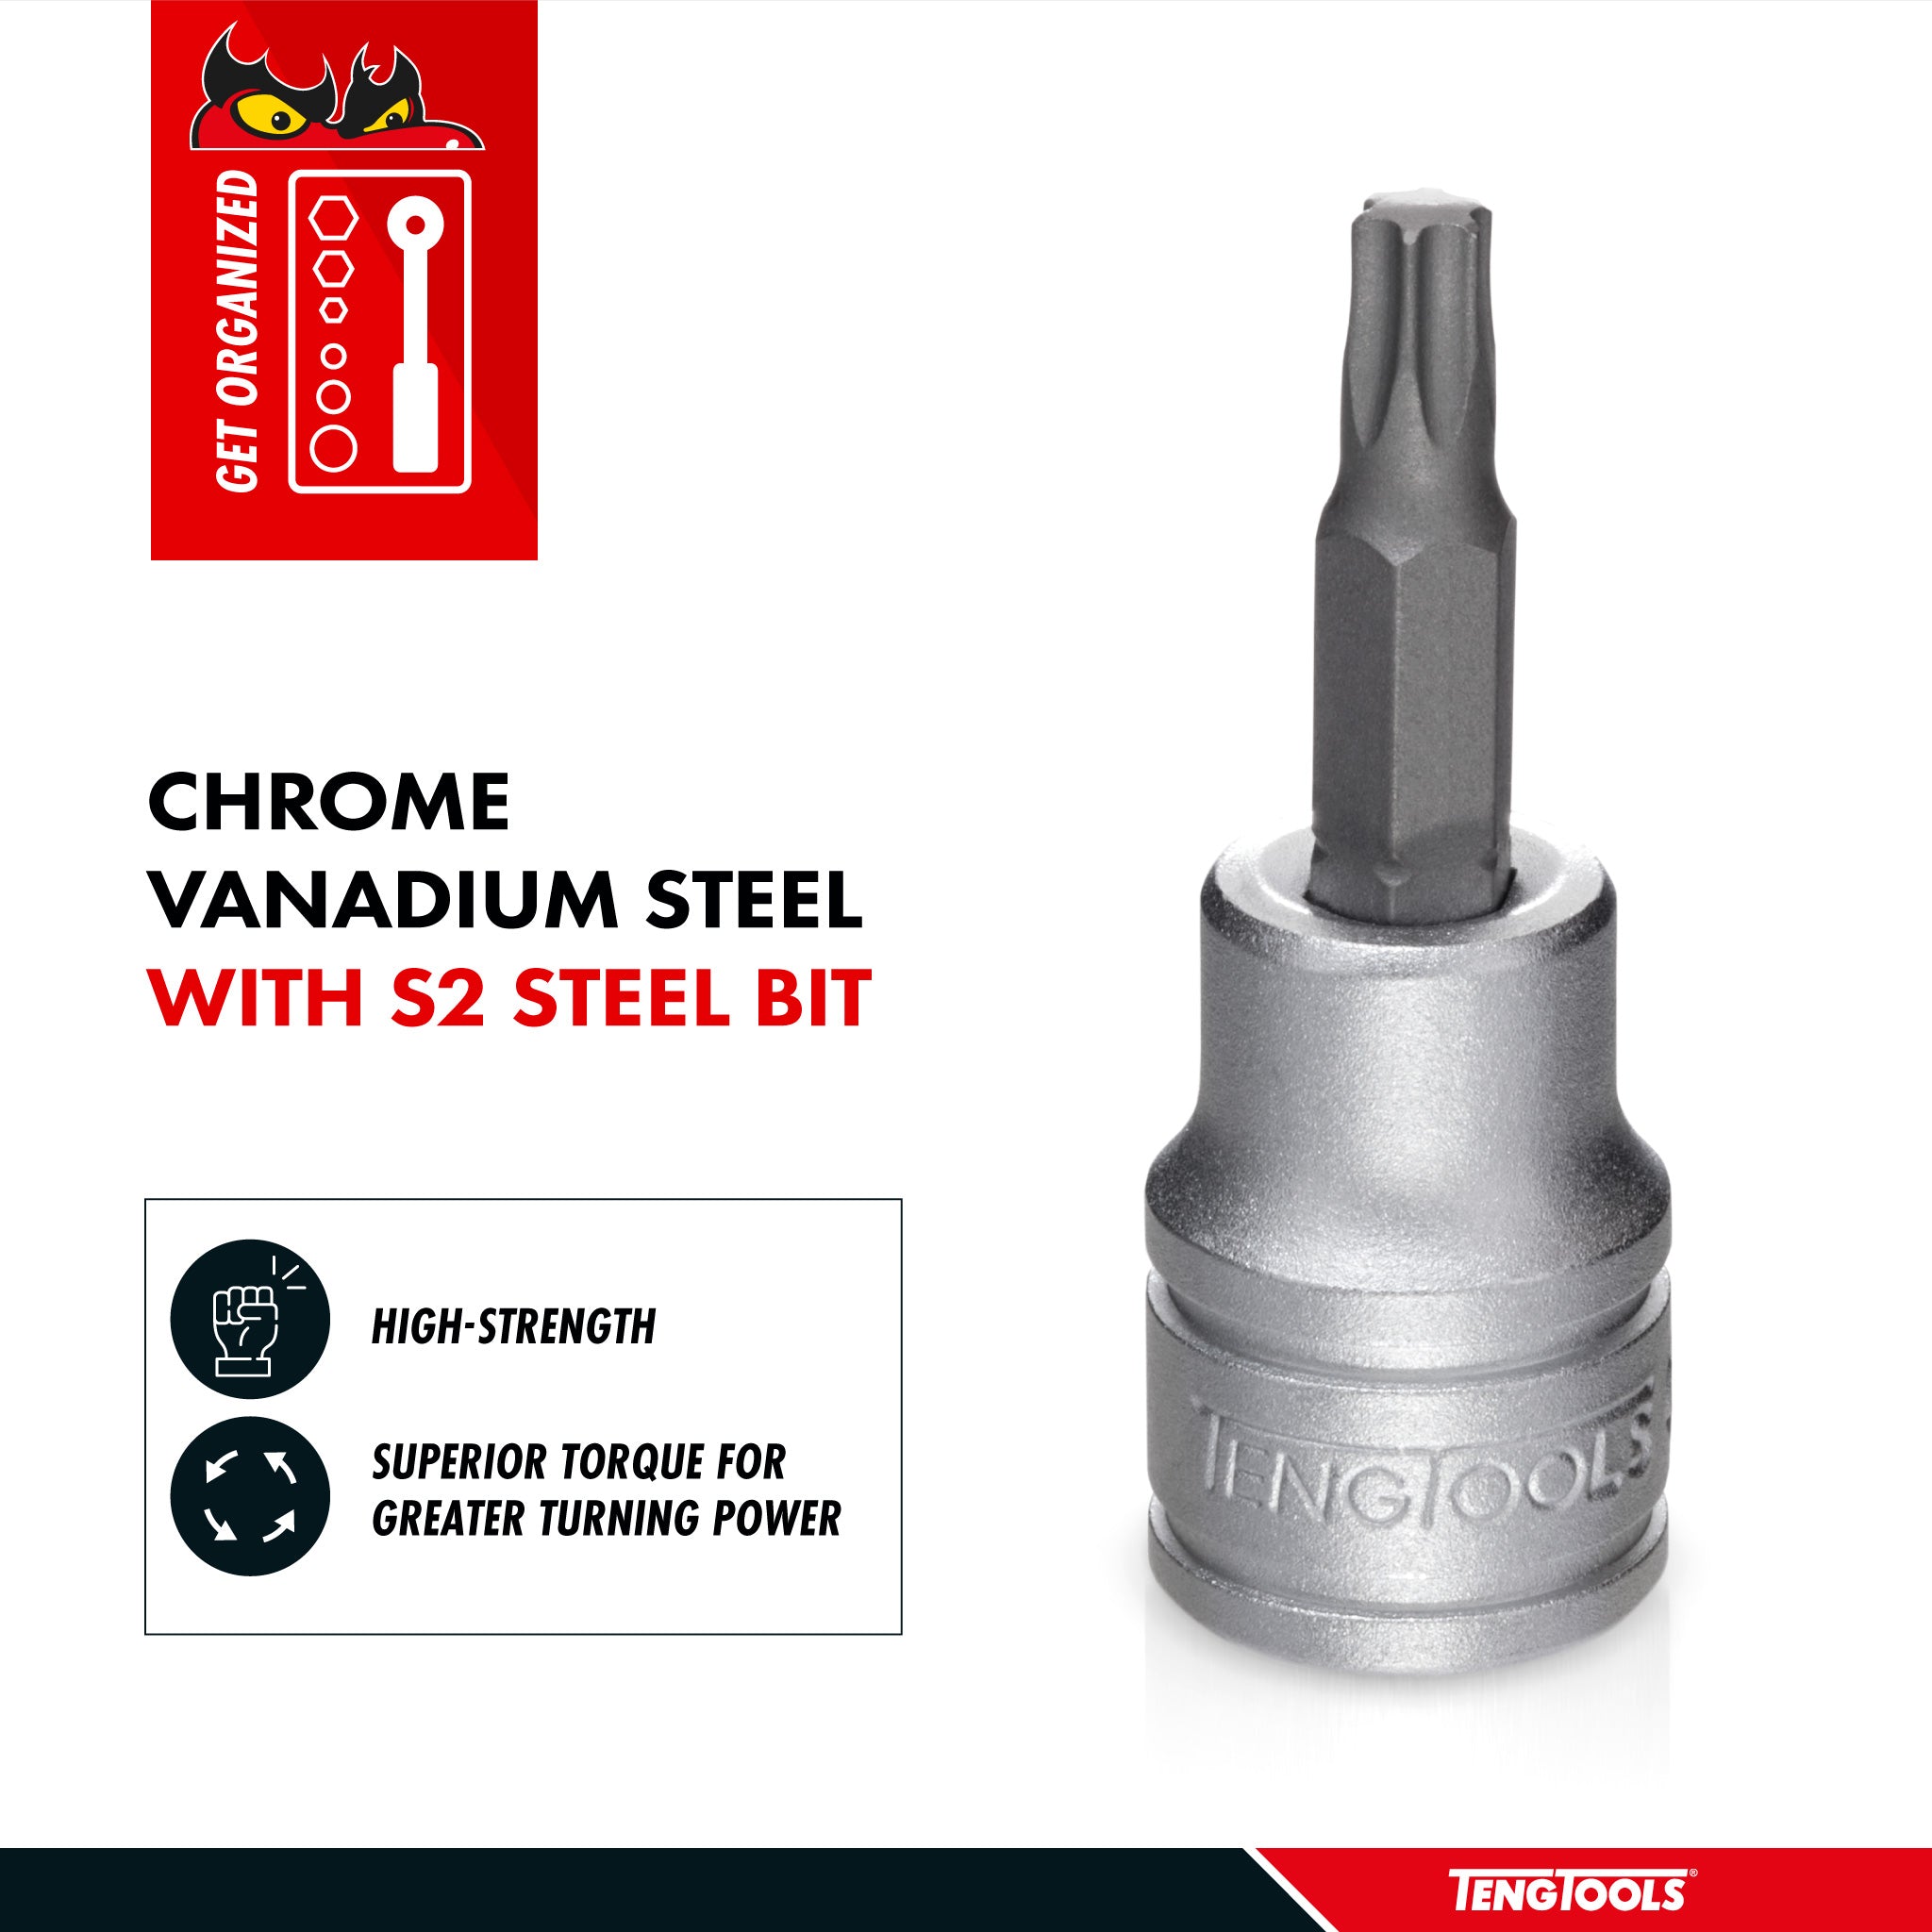 Teng Tools 1/4 Inch Drive Metric Torx TX Chrome Vanadium Sockets - TX20